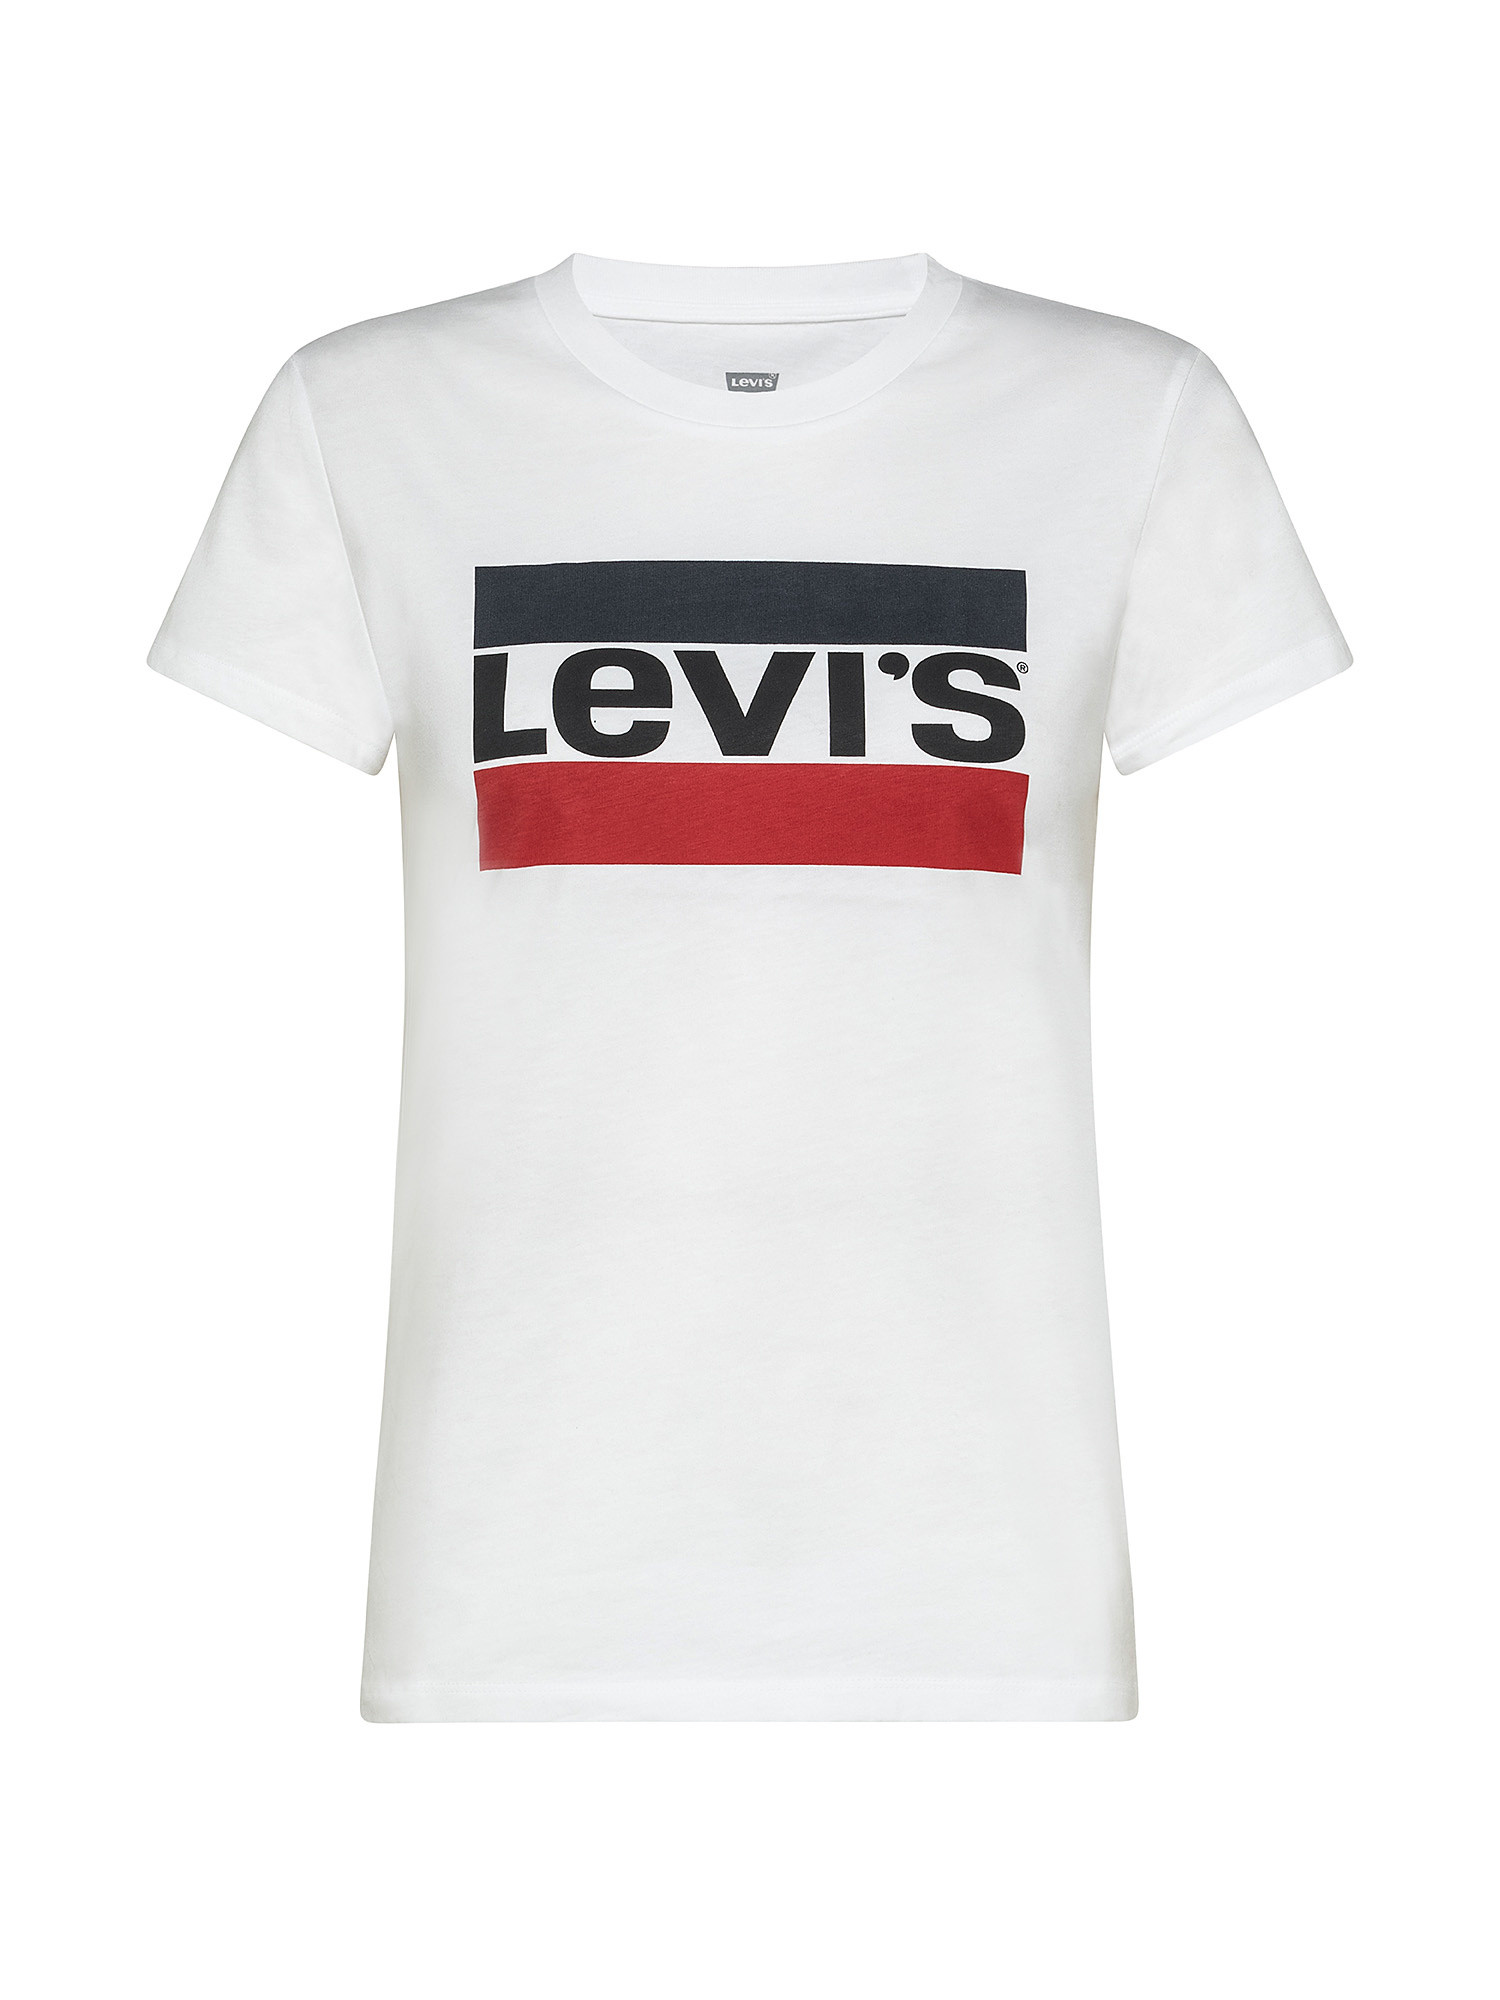 Футболка Perfect Tee с логотипом Levi's, белый футболка levi s perfect tee красный бордовый